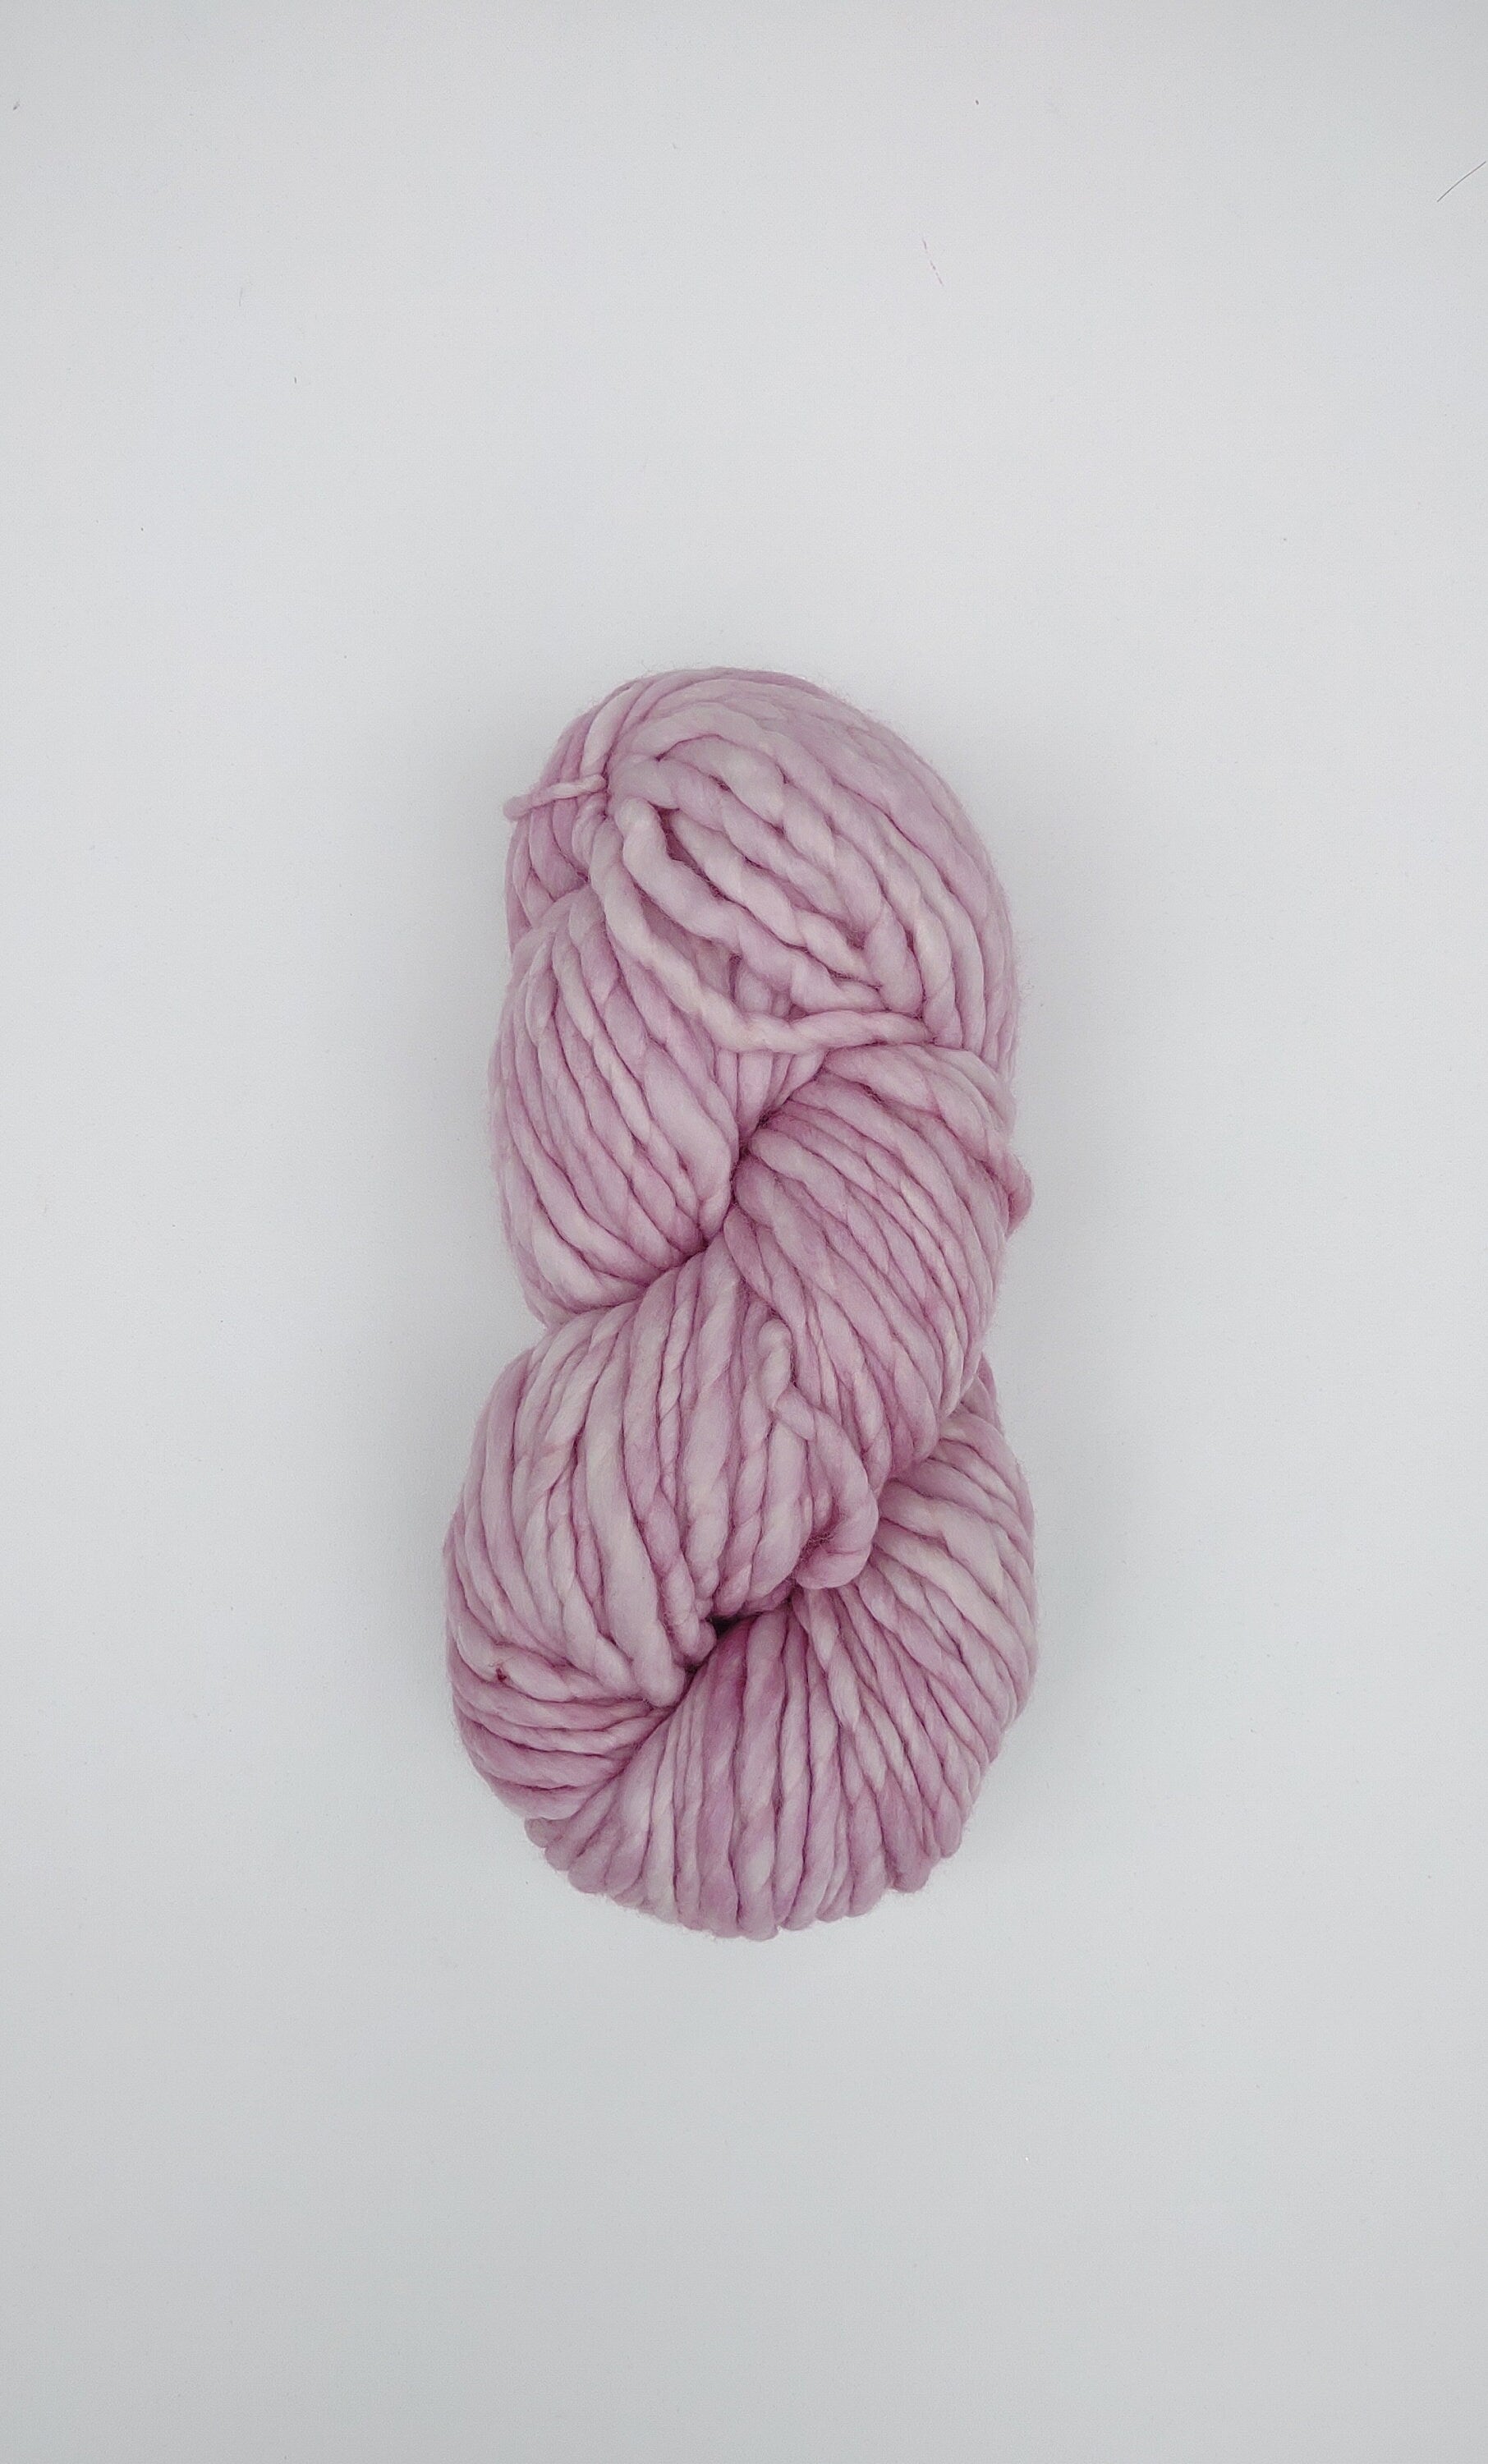 1 Skein Malabrigo Rasta Yarn in Valentina color. Merino Wool. Soft Merino Wool. Blush pink yarn kit.